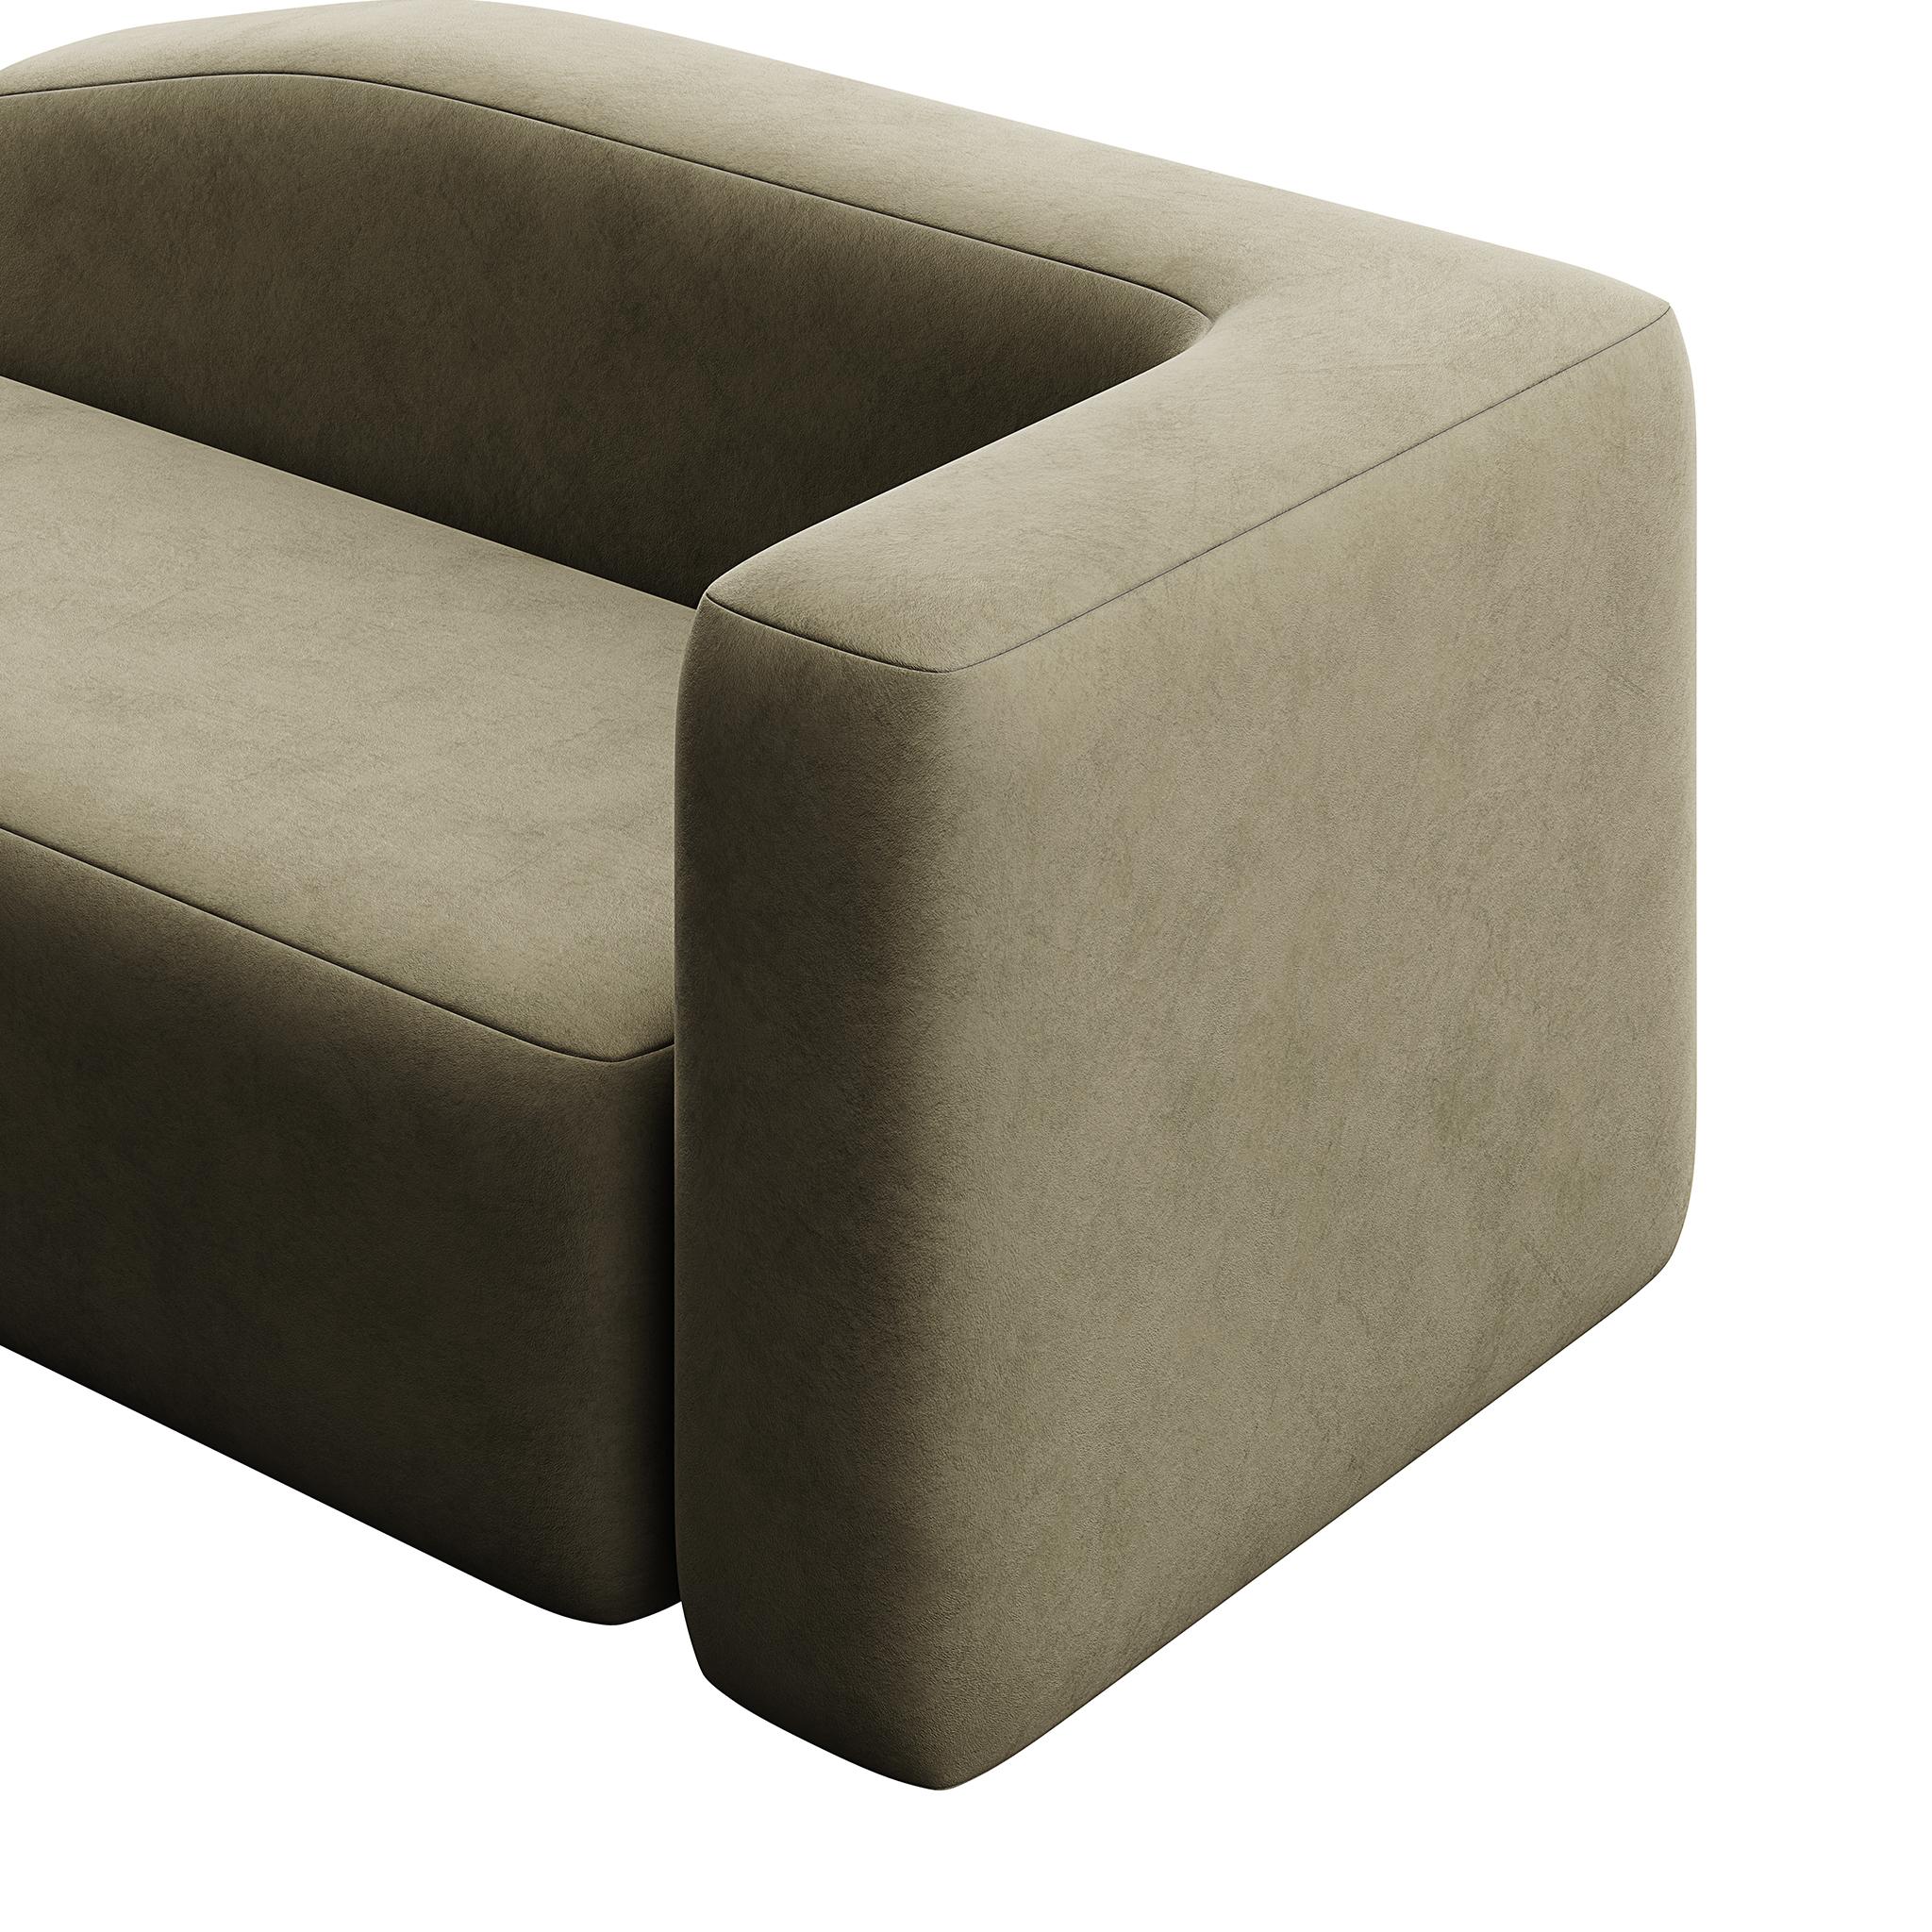 Organic Modern Contemporary Customizable Upholstered Chaise Longue Sofa Green Forest Velvet For Sale